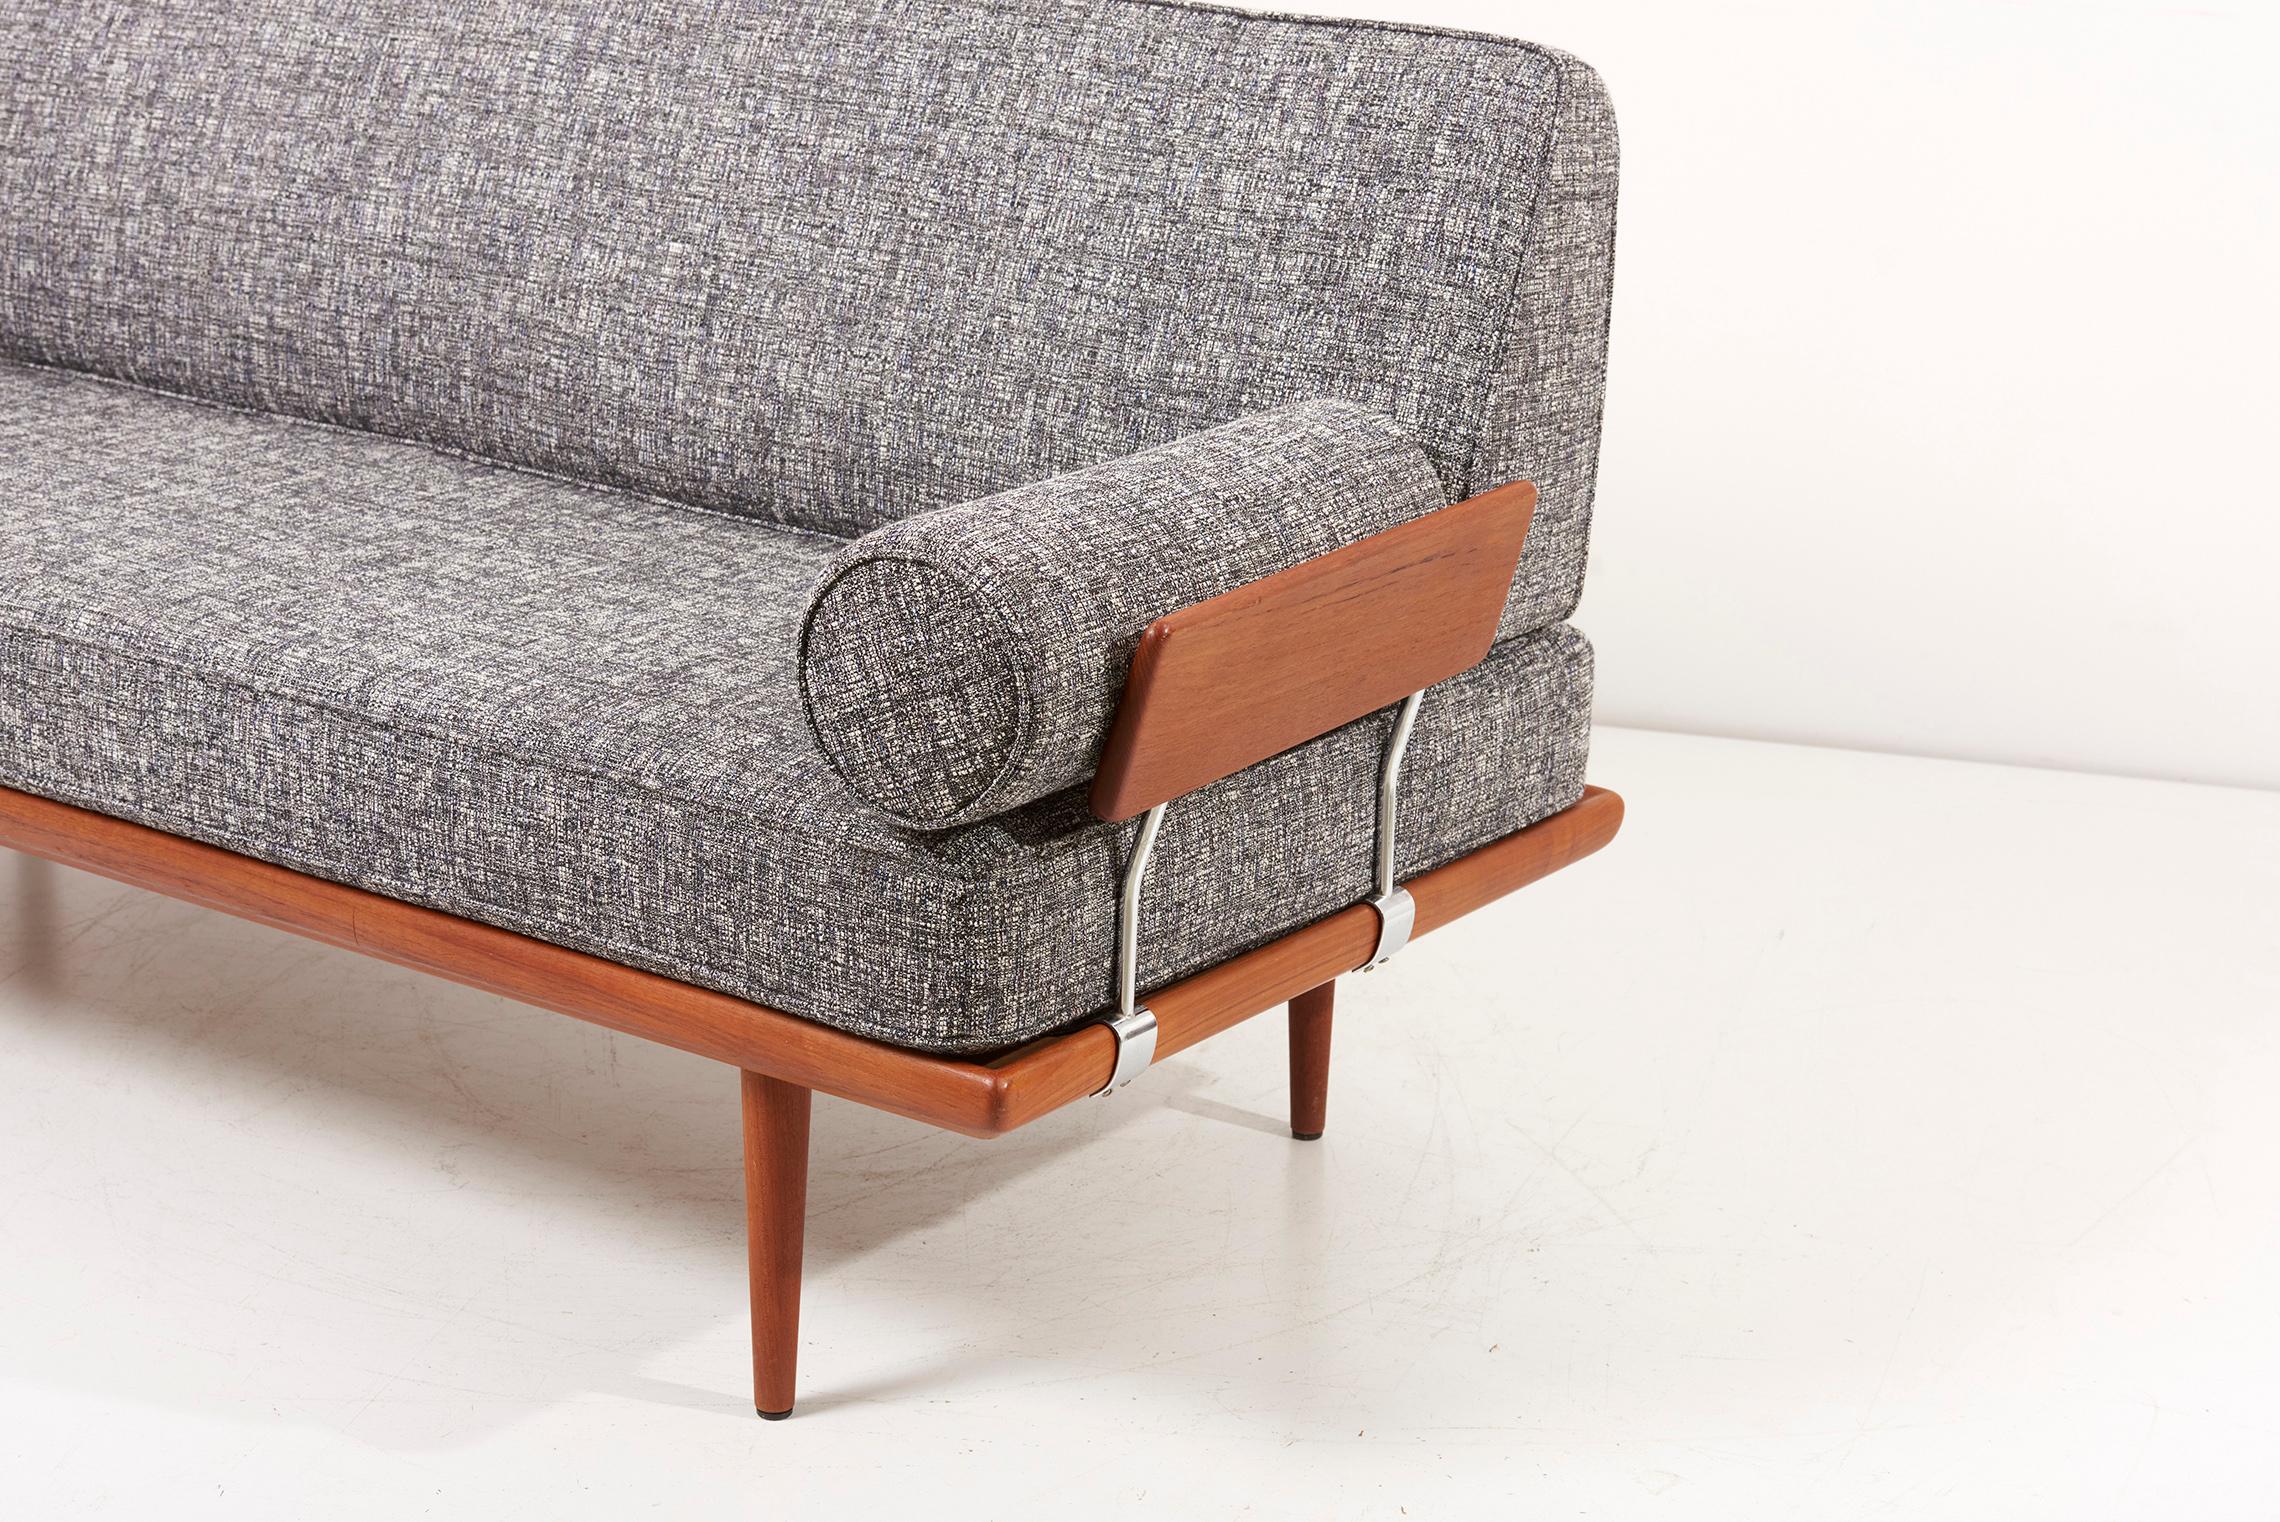 Peter Hvidt daybed or sofa in teak, Denmark 1950s. New upholstered in Raf Simons Kvadrat Fabric.